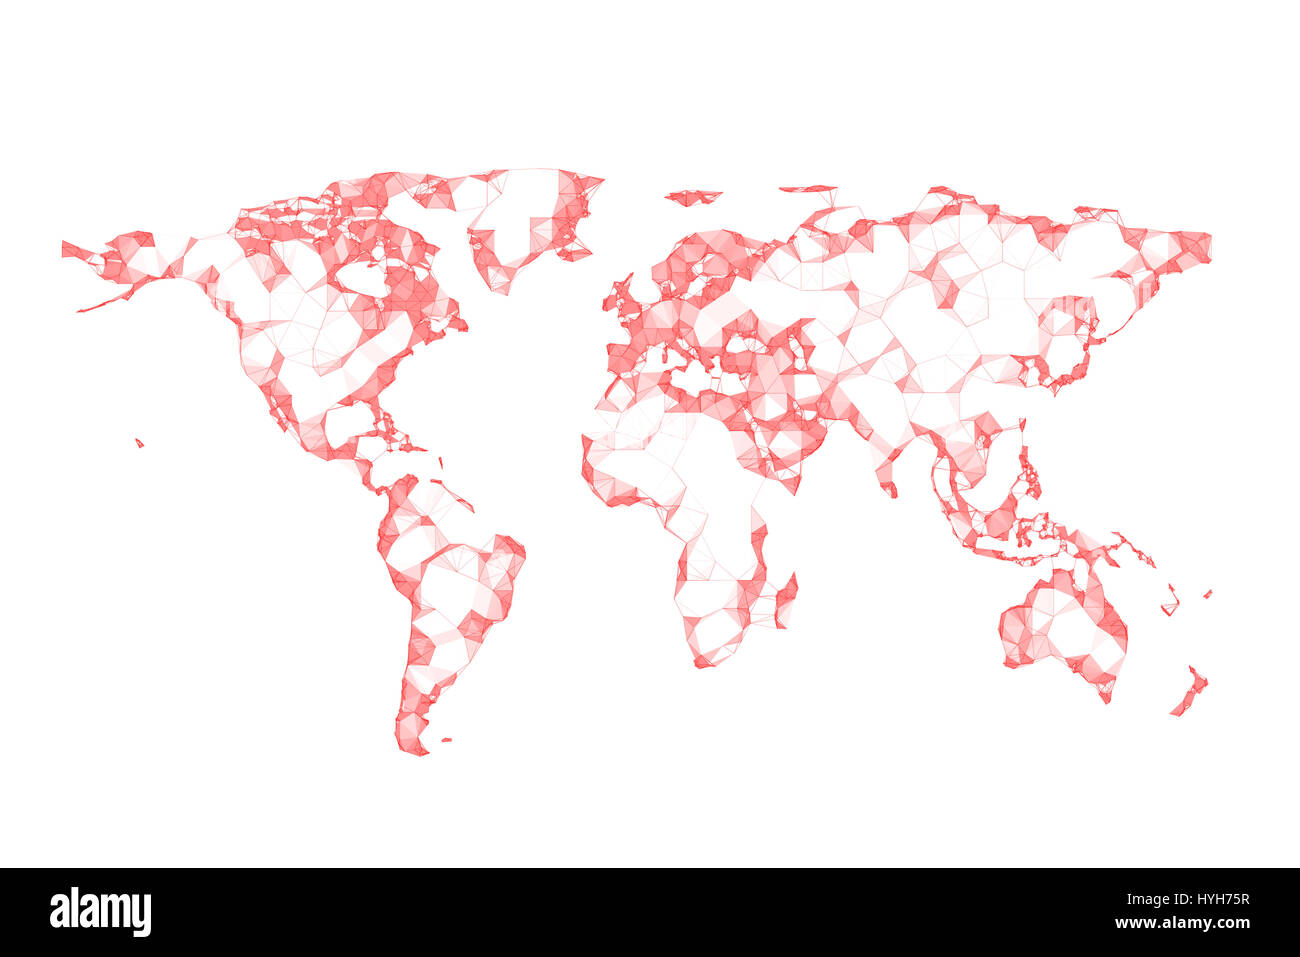 Polygon world map isolated on white background Stock Photo